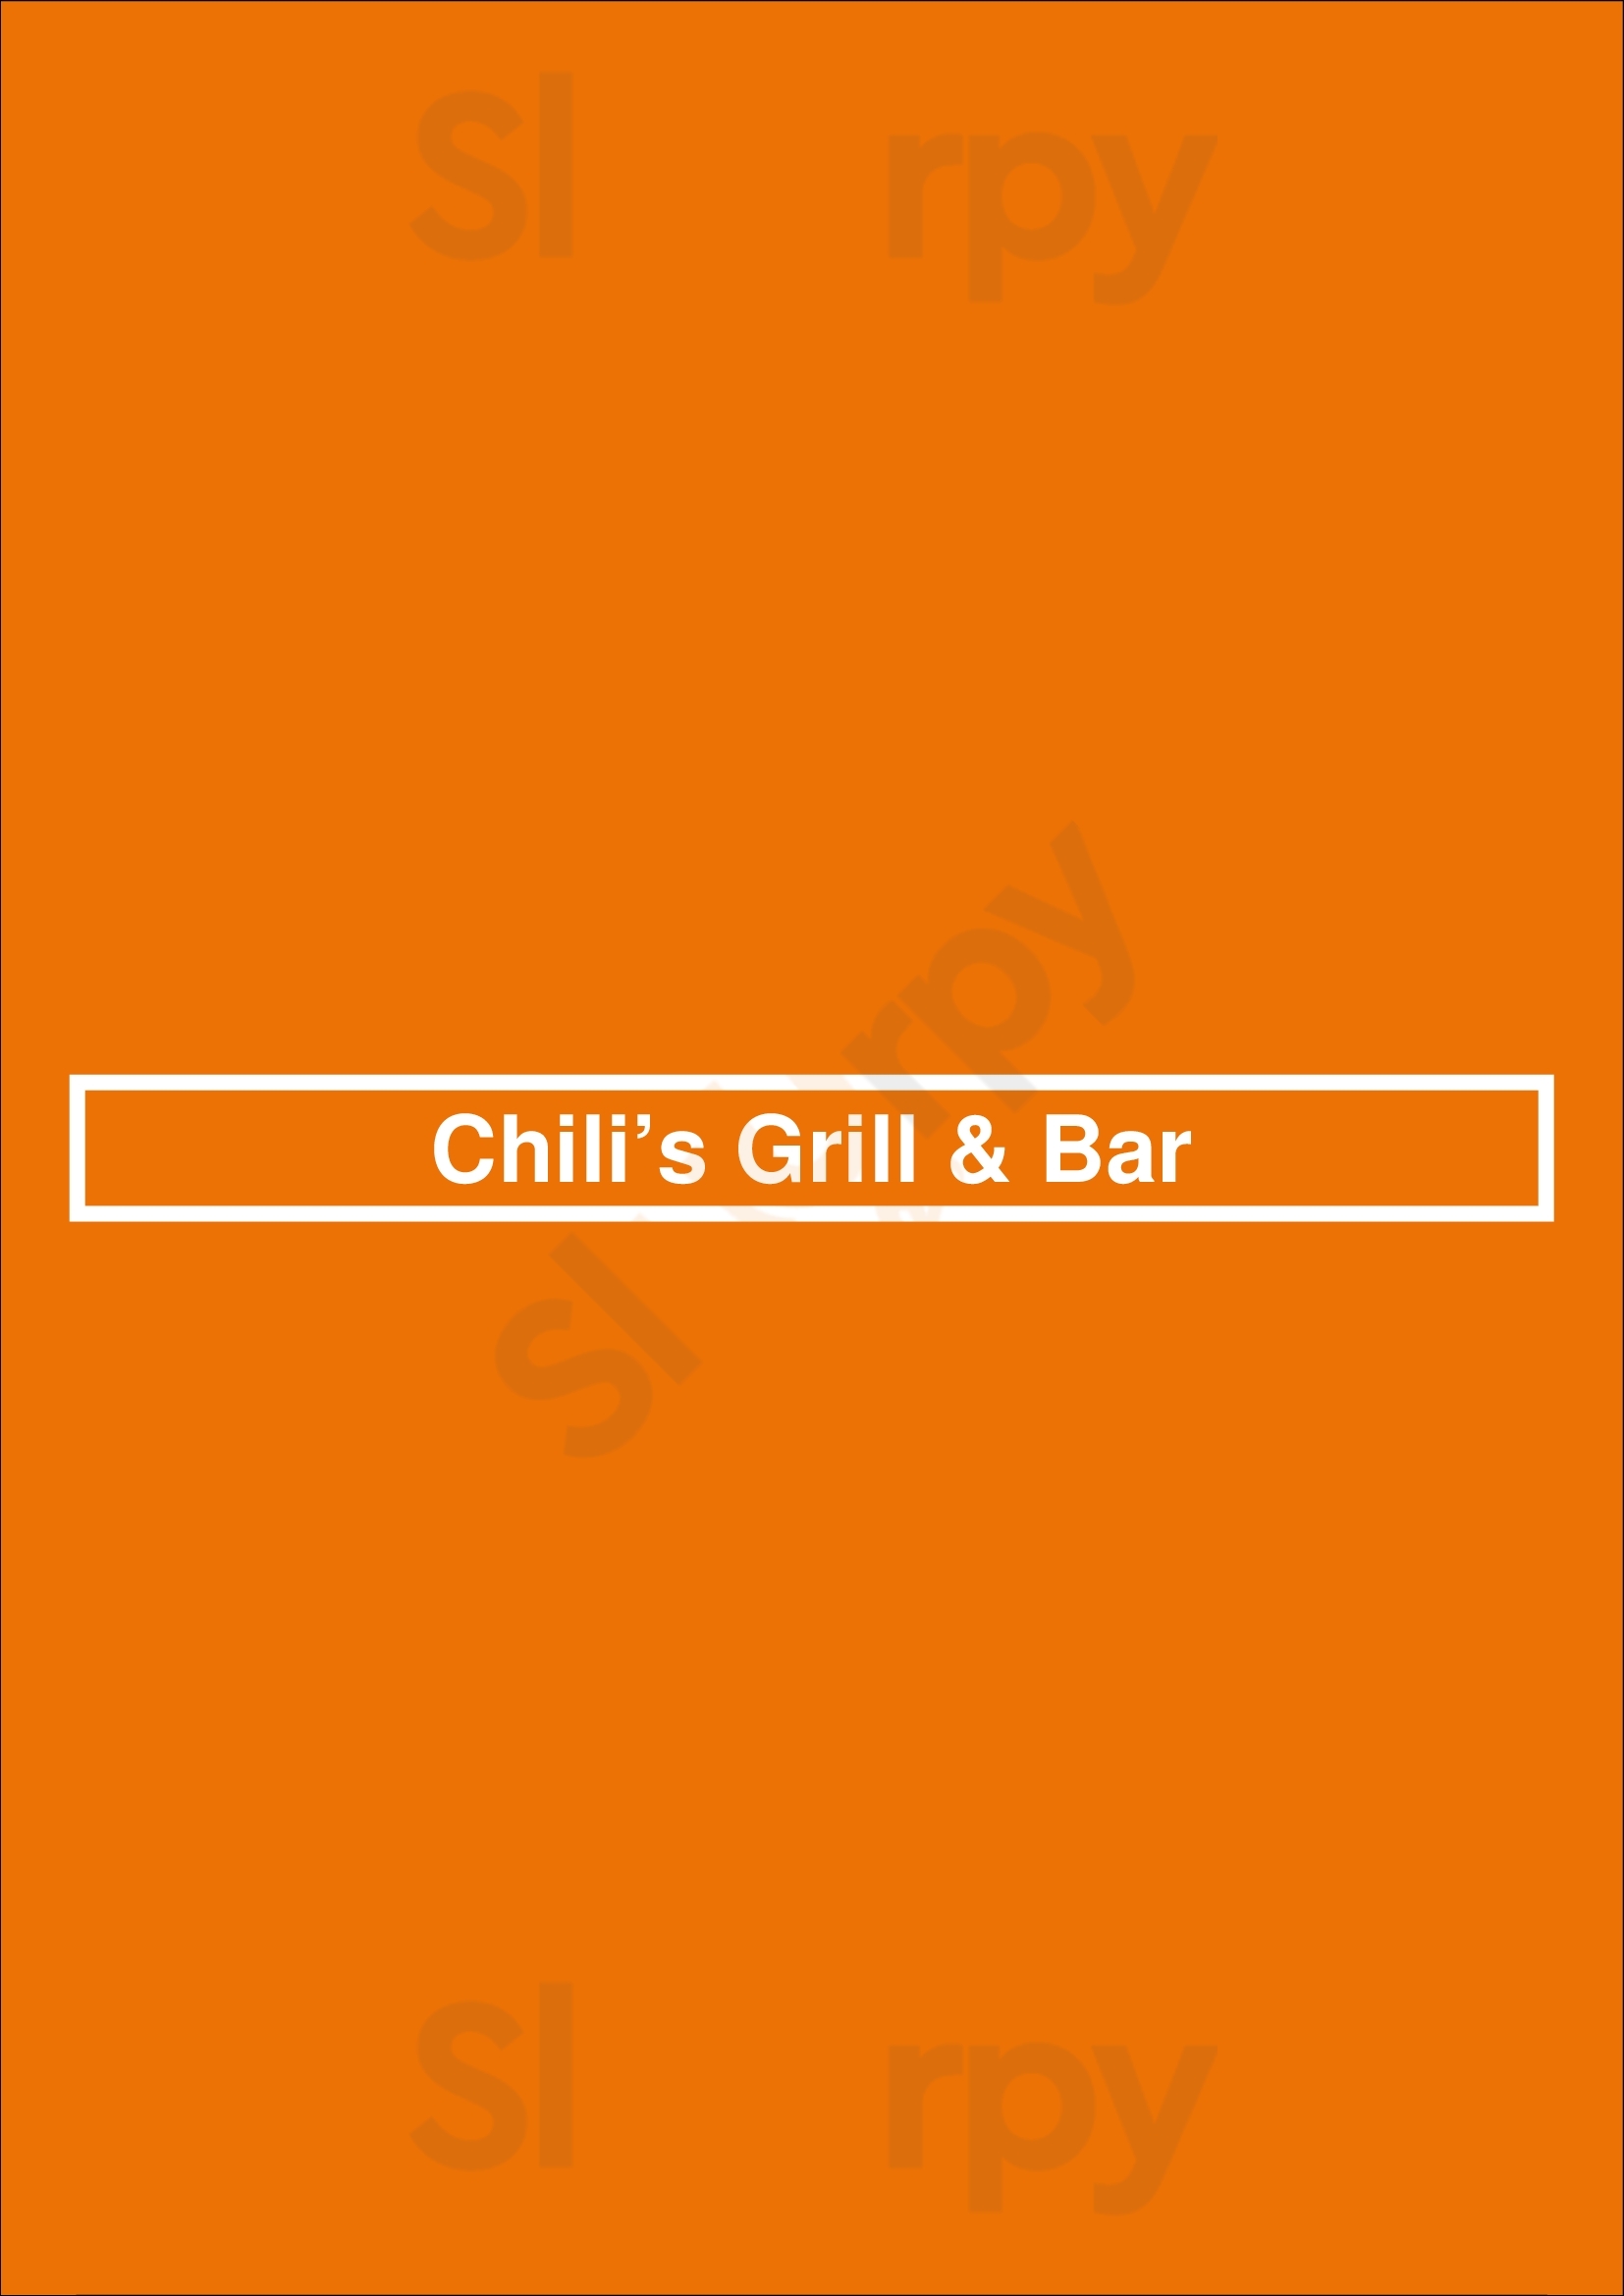 Chili’s Grill & Bar Orlando Menu - 1